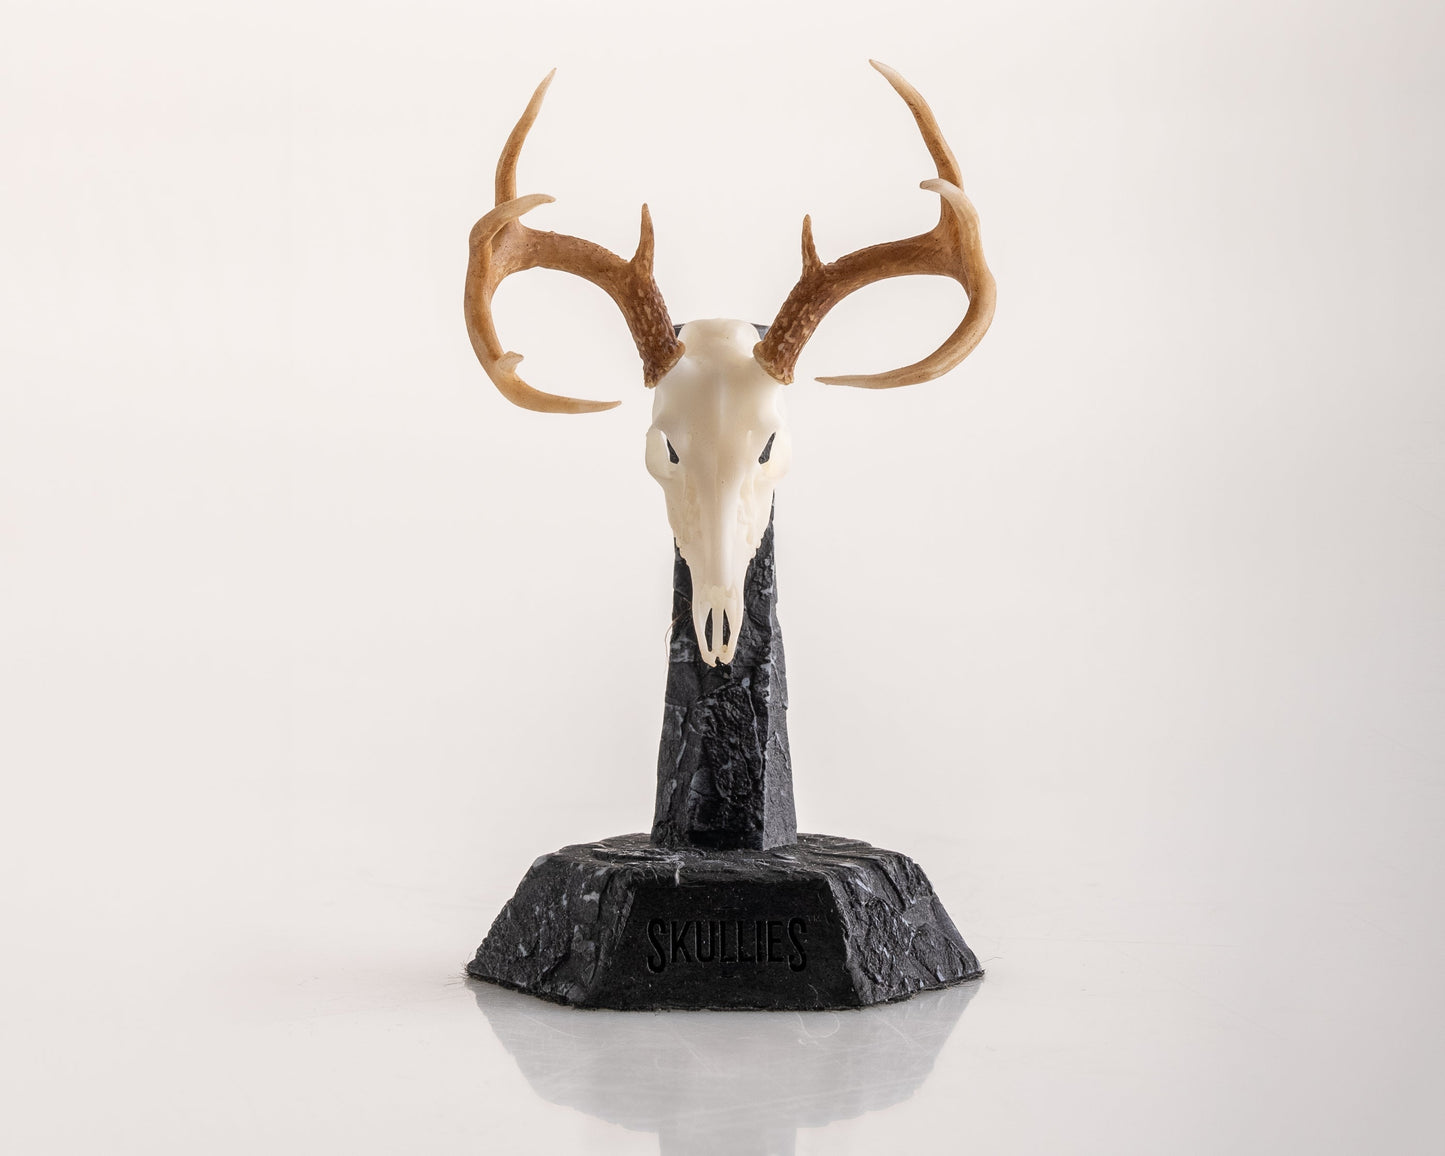 Resin Skullies - Miniature Replica Whitetail Deer Skull